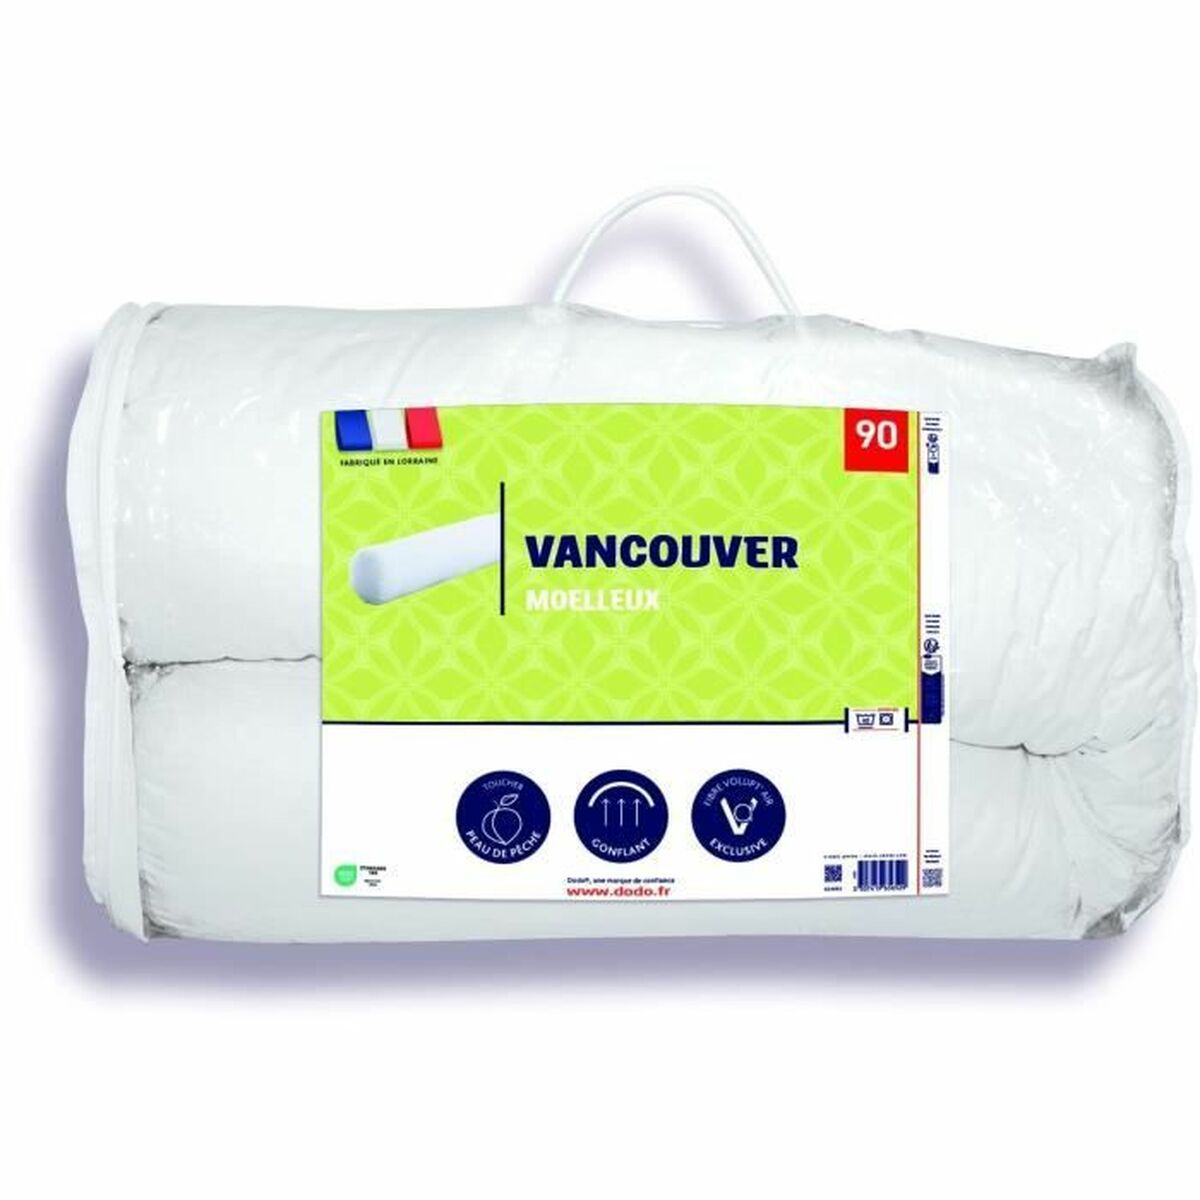 Pillow DODO Vancouver White 90 cm